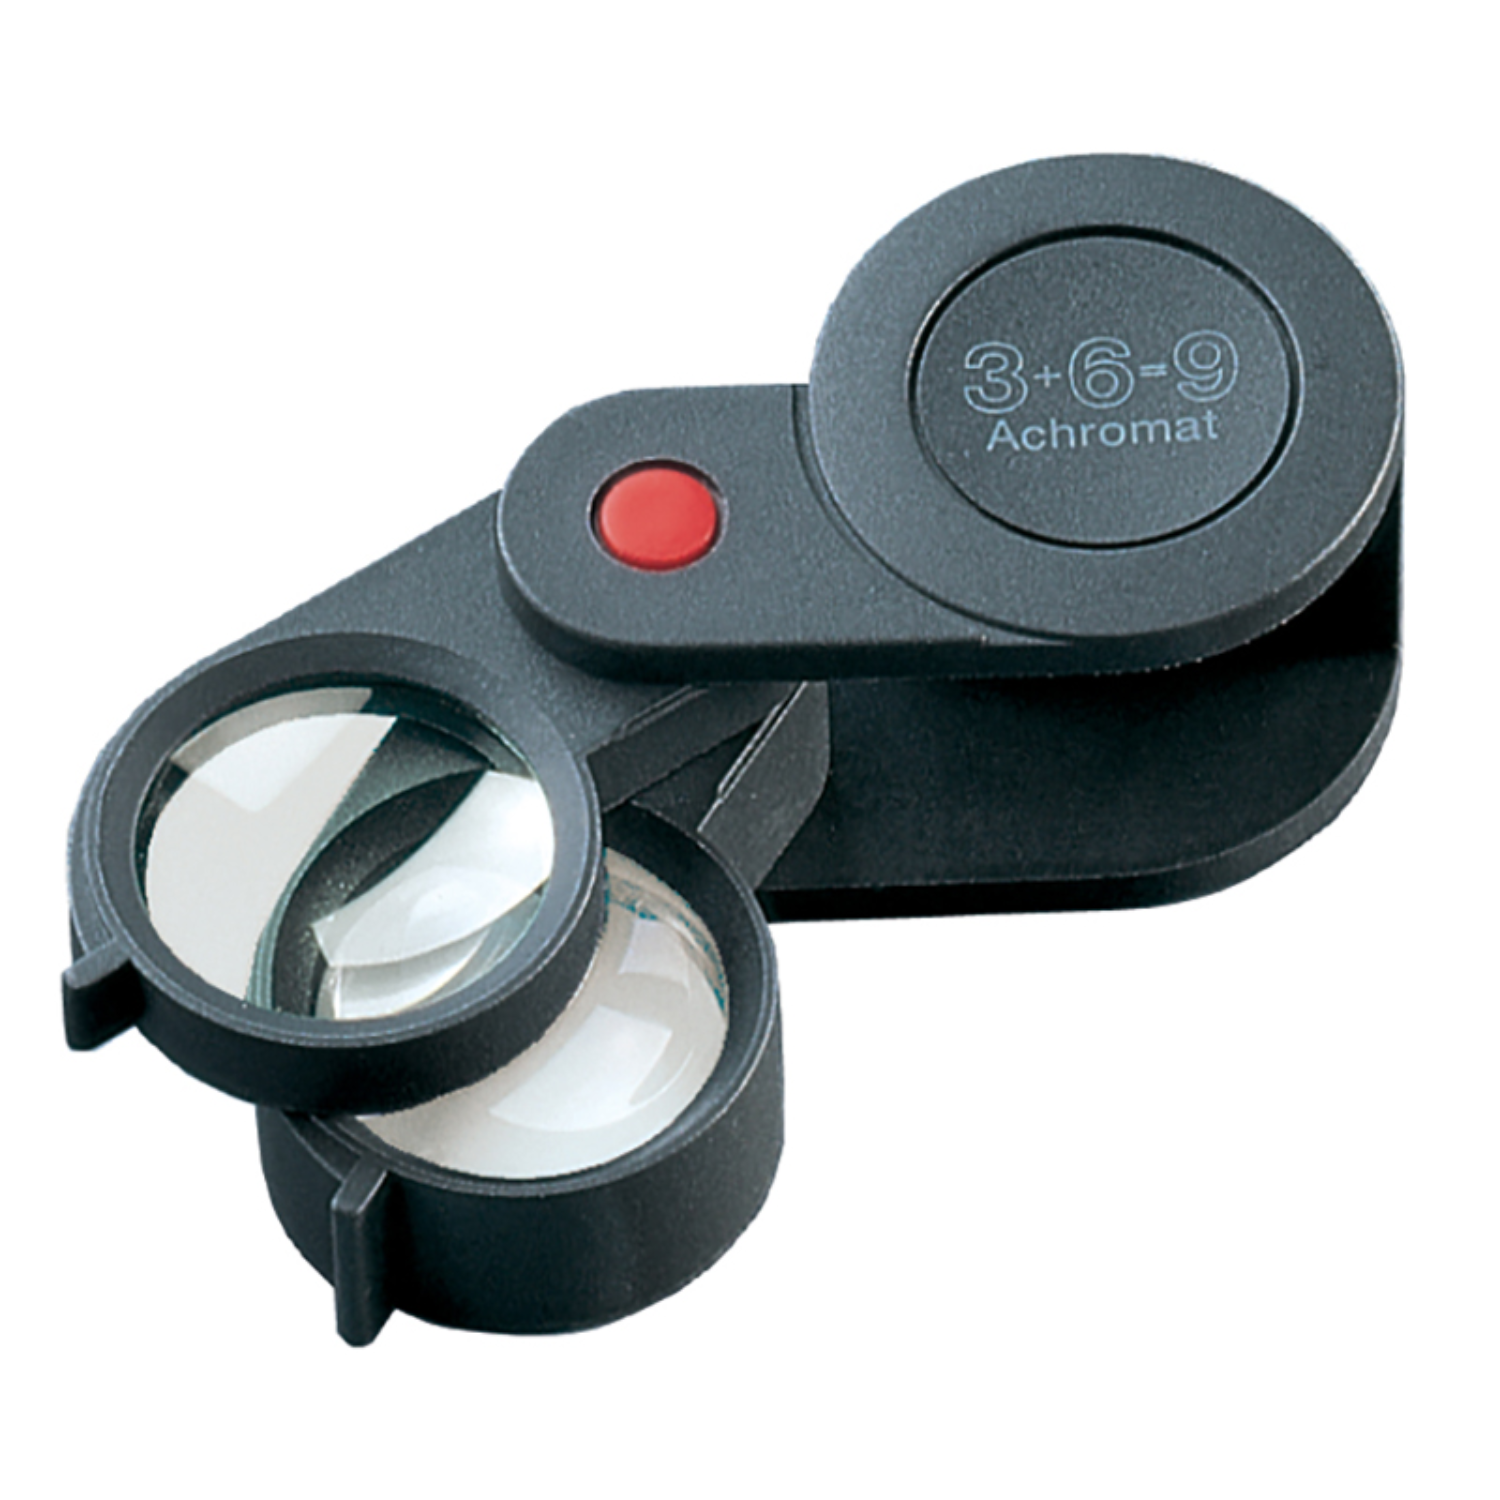 Image of the Eschenbach Folding Dual-Lens Pocket Magnifier 3x + 6x.